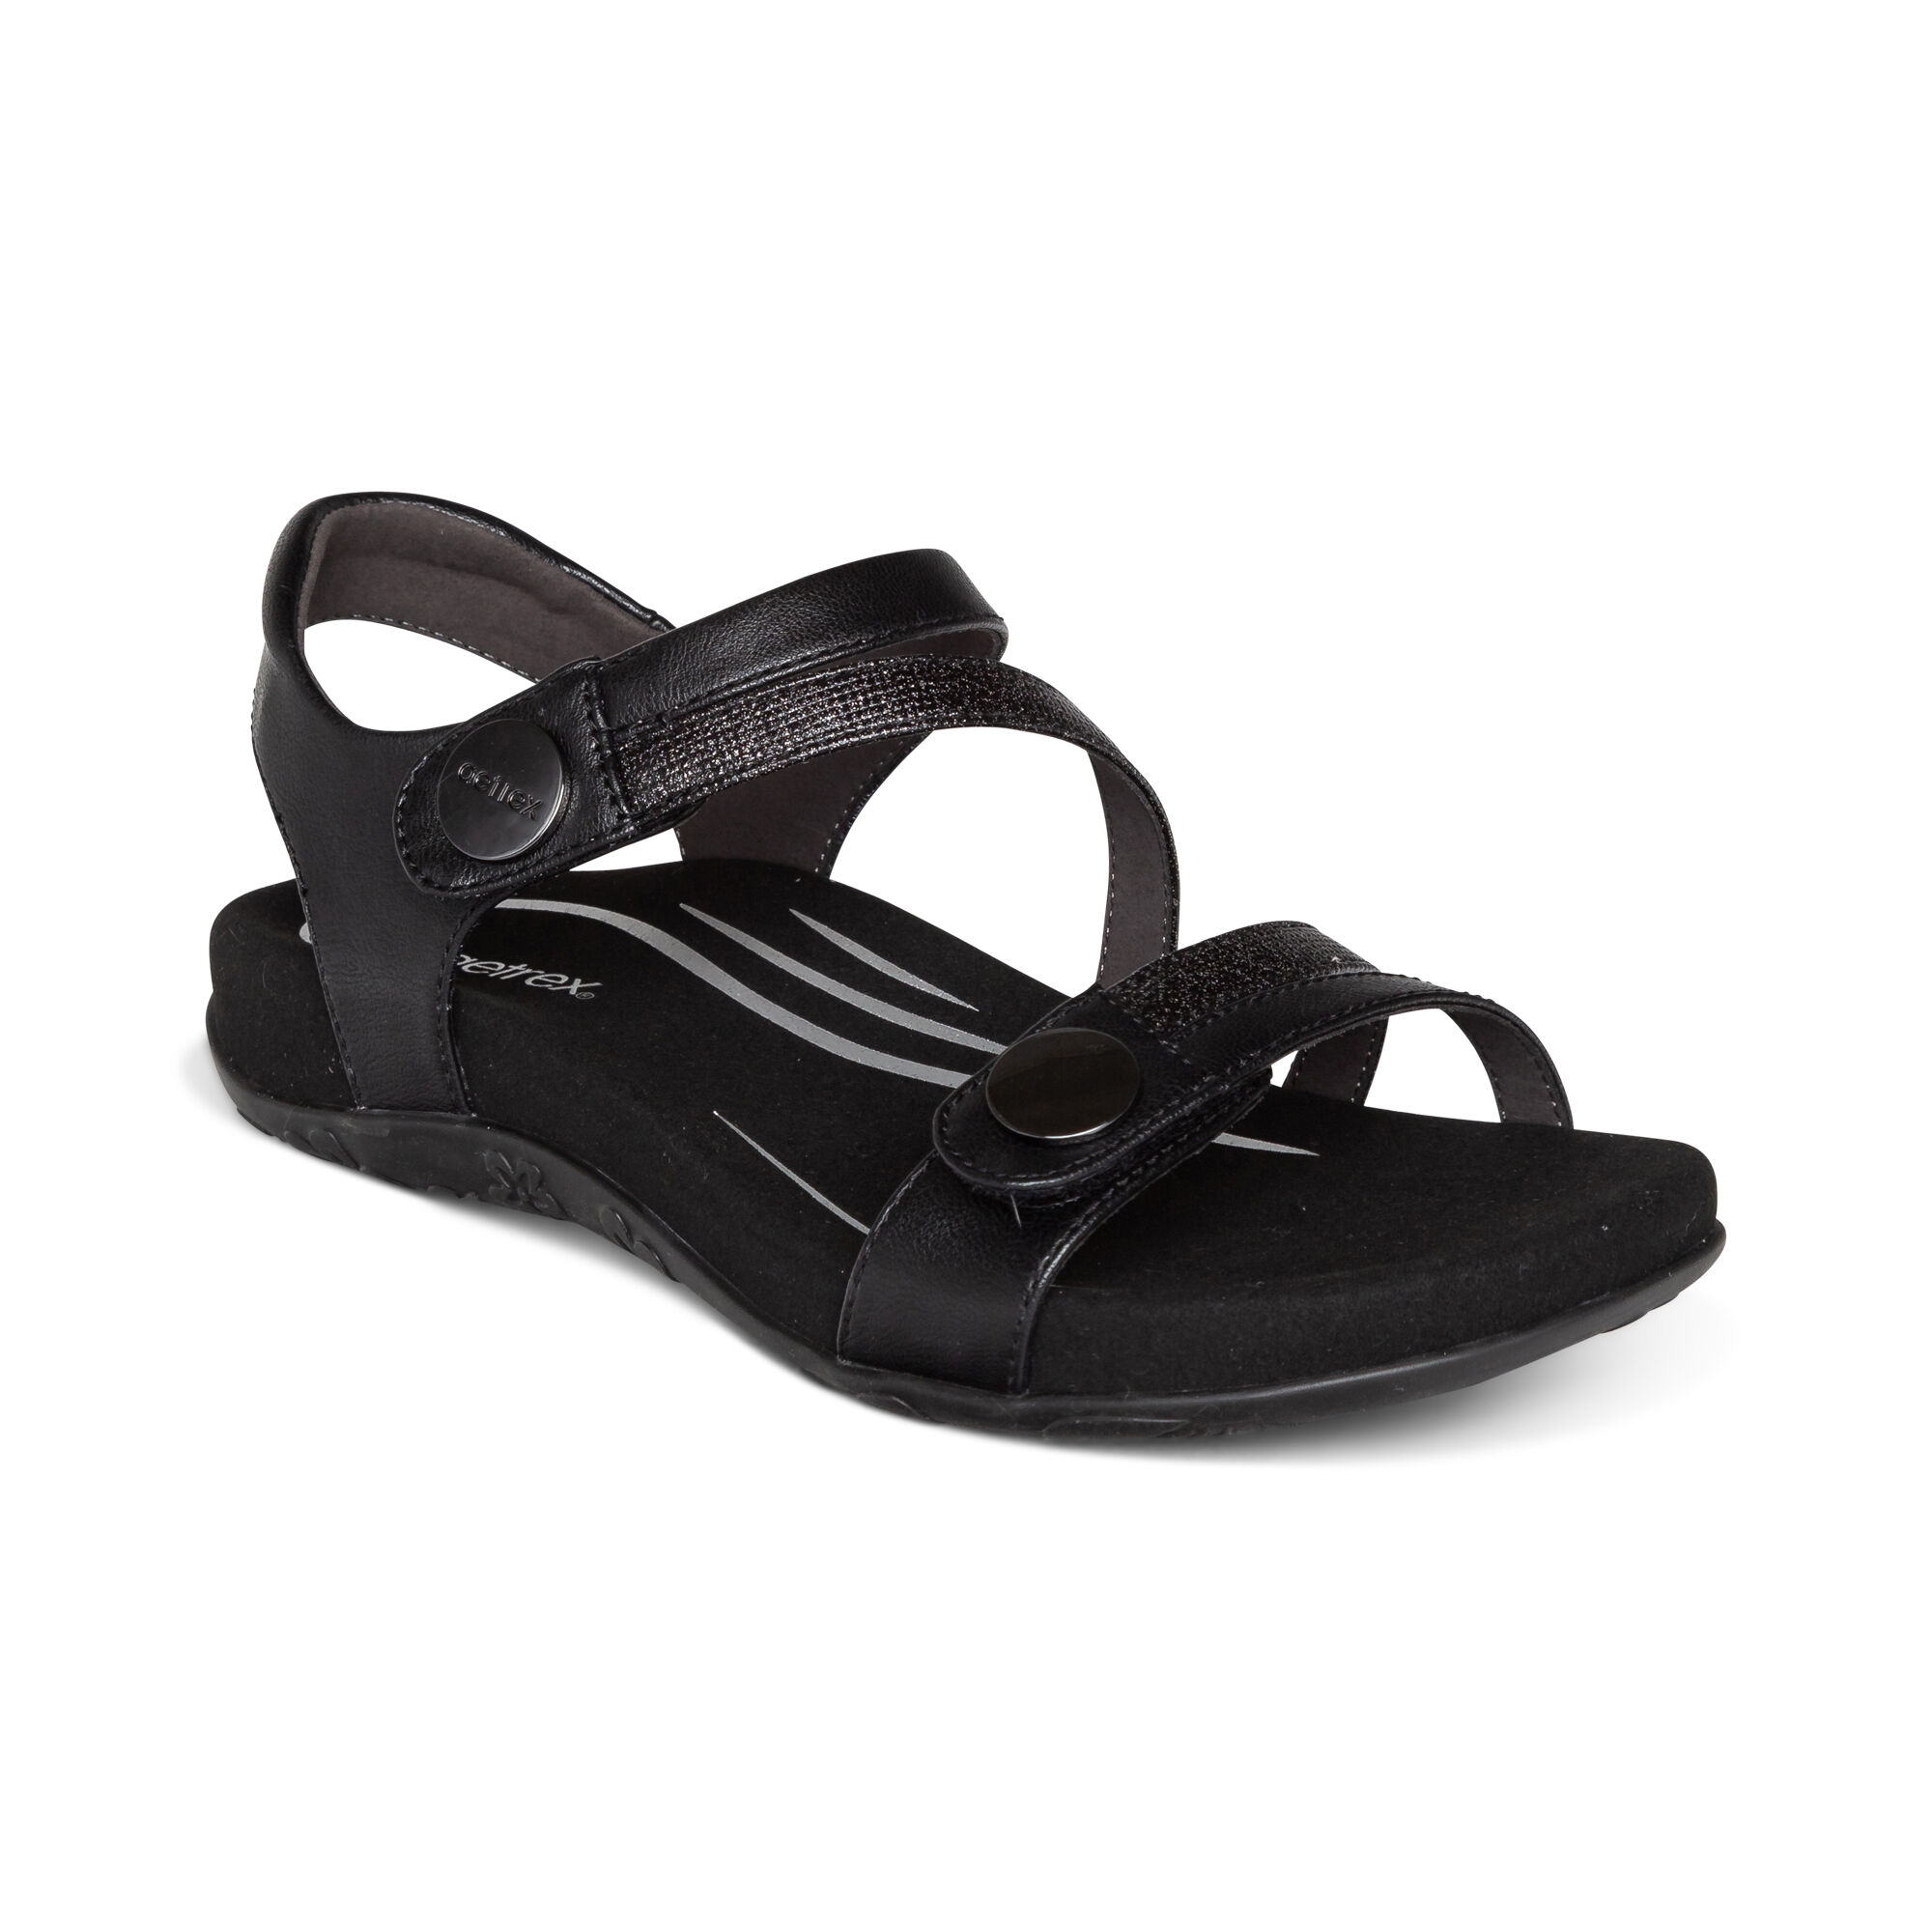 keusn women's open toe ankle strap buckle low heels sandals shoes with back  zipper black size 7.5 - Walmart.com